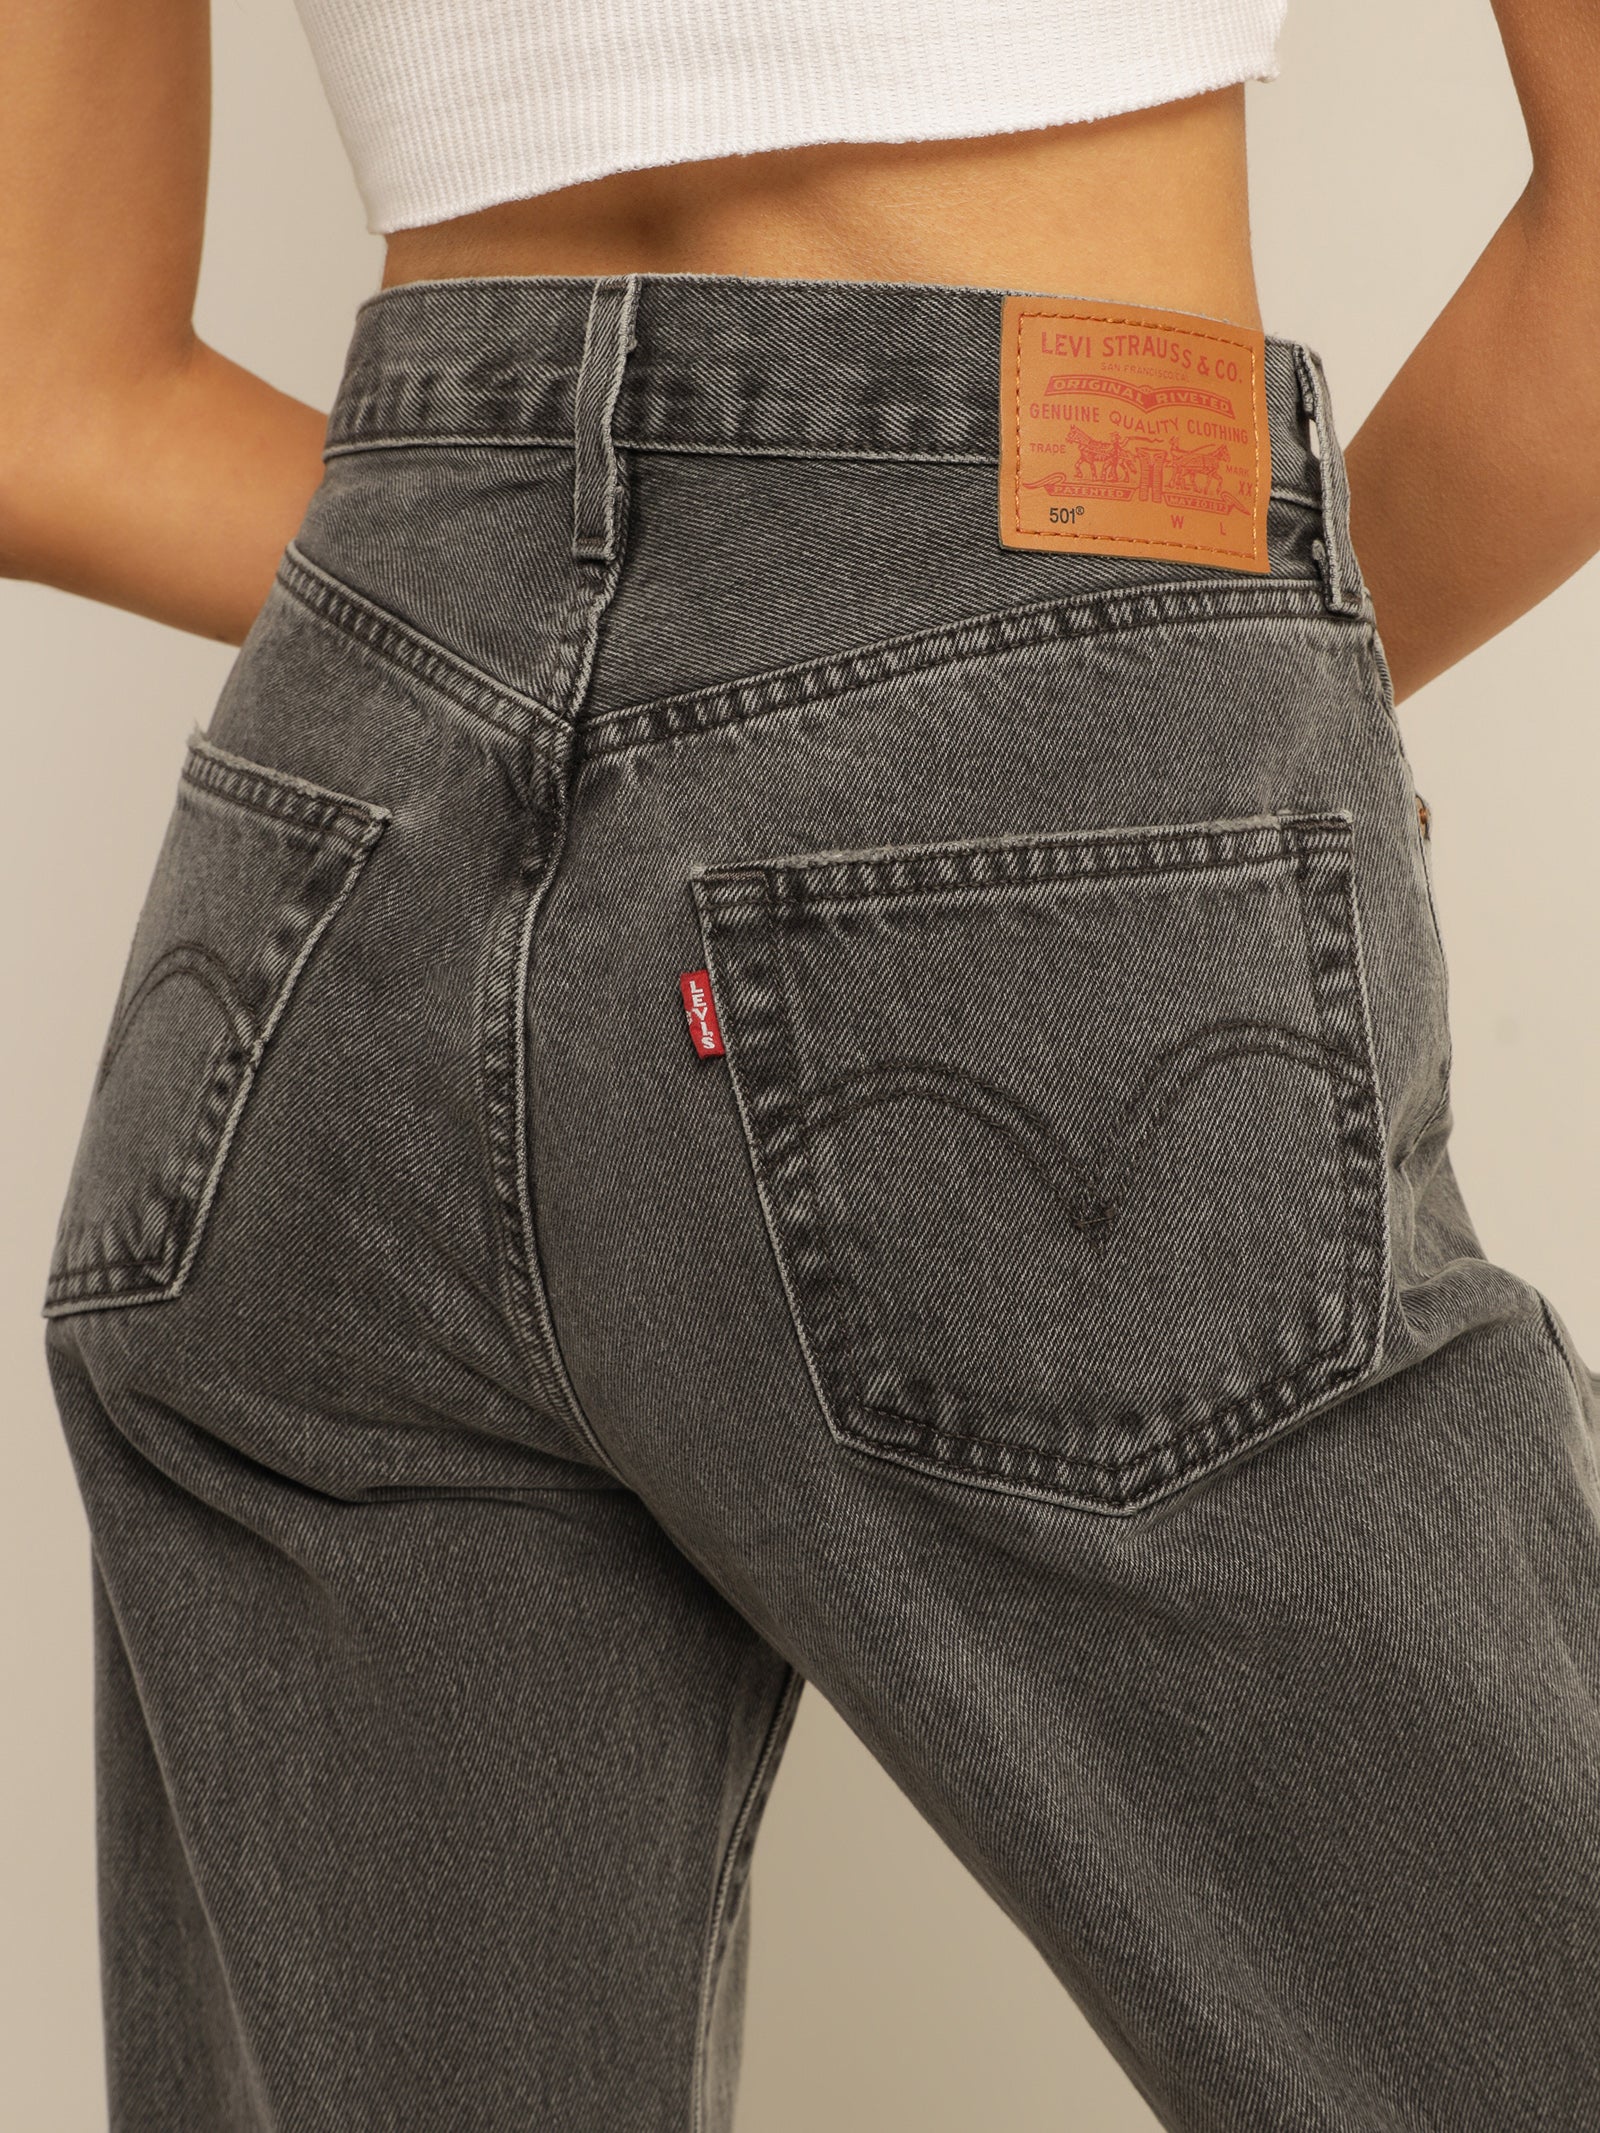 90s 501 Jeans in Fire Starter Black (30 length) - Glue Store NZ